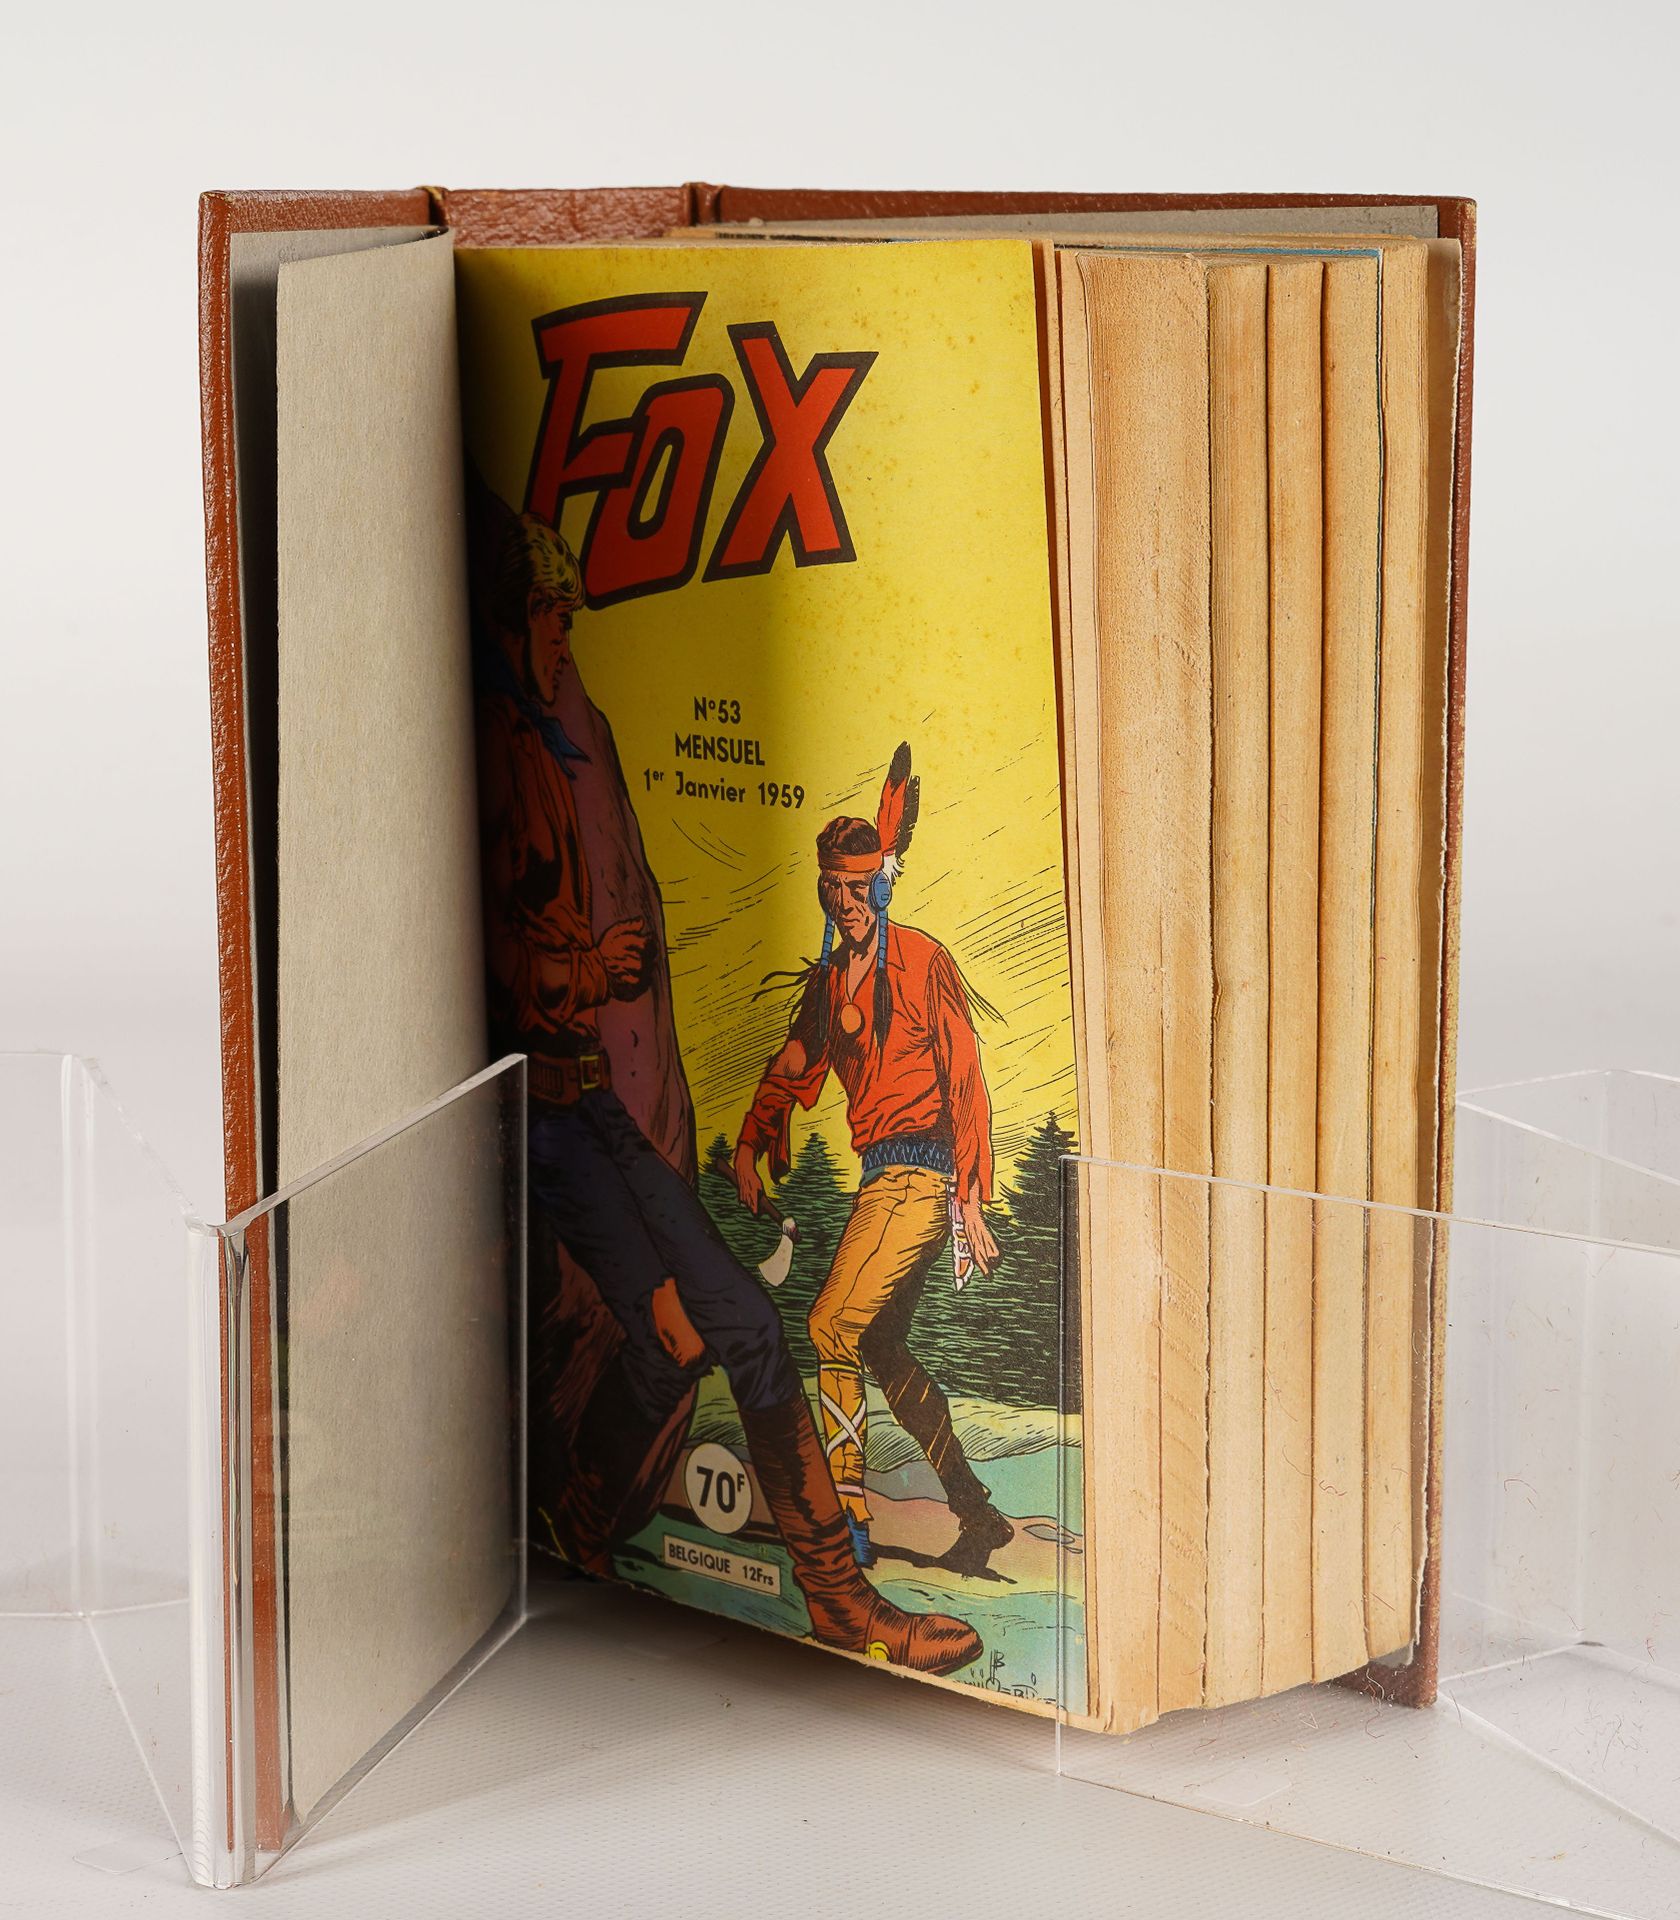 LUG SEMIC, ARCHIVES COMICS Carpeta con 6 FOX nº 53 a 58, polipiel marrón, tamaño&hellip;